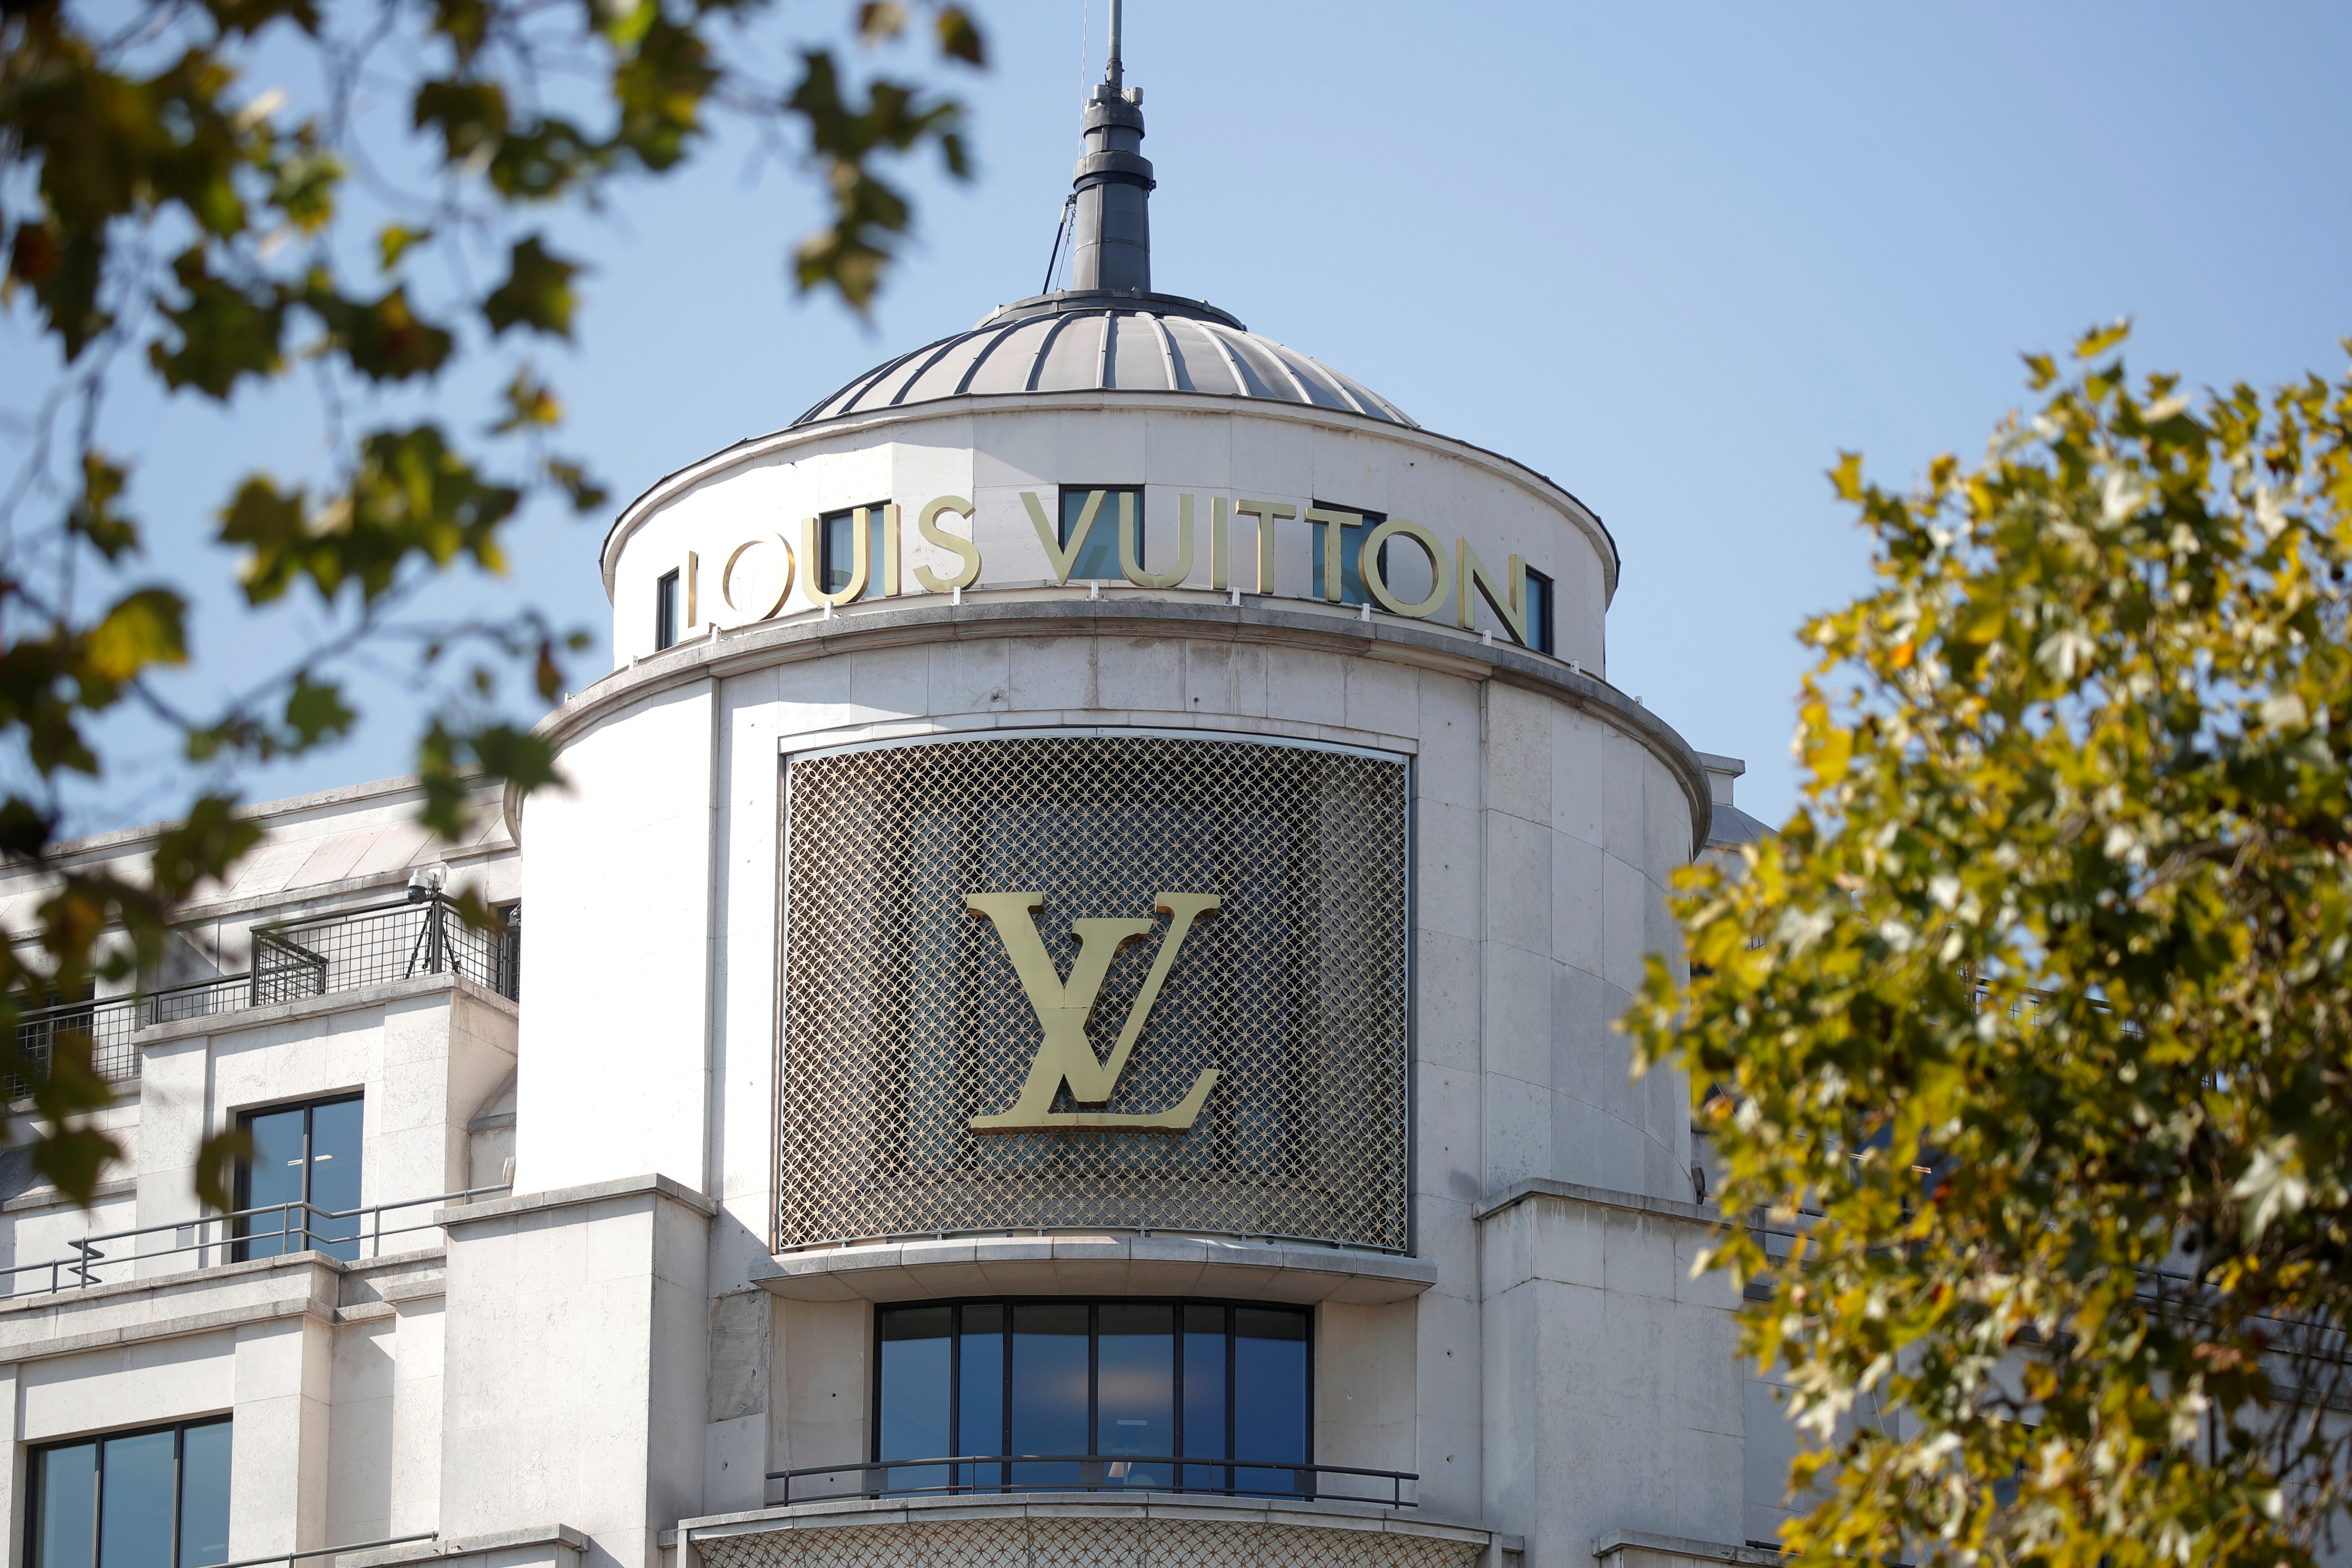 Louis Vuitton logo outside a store in Paris